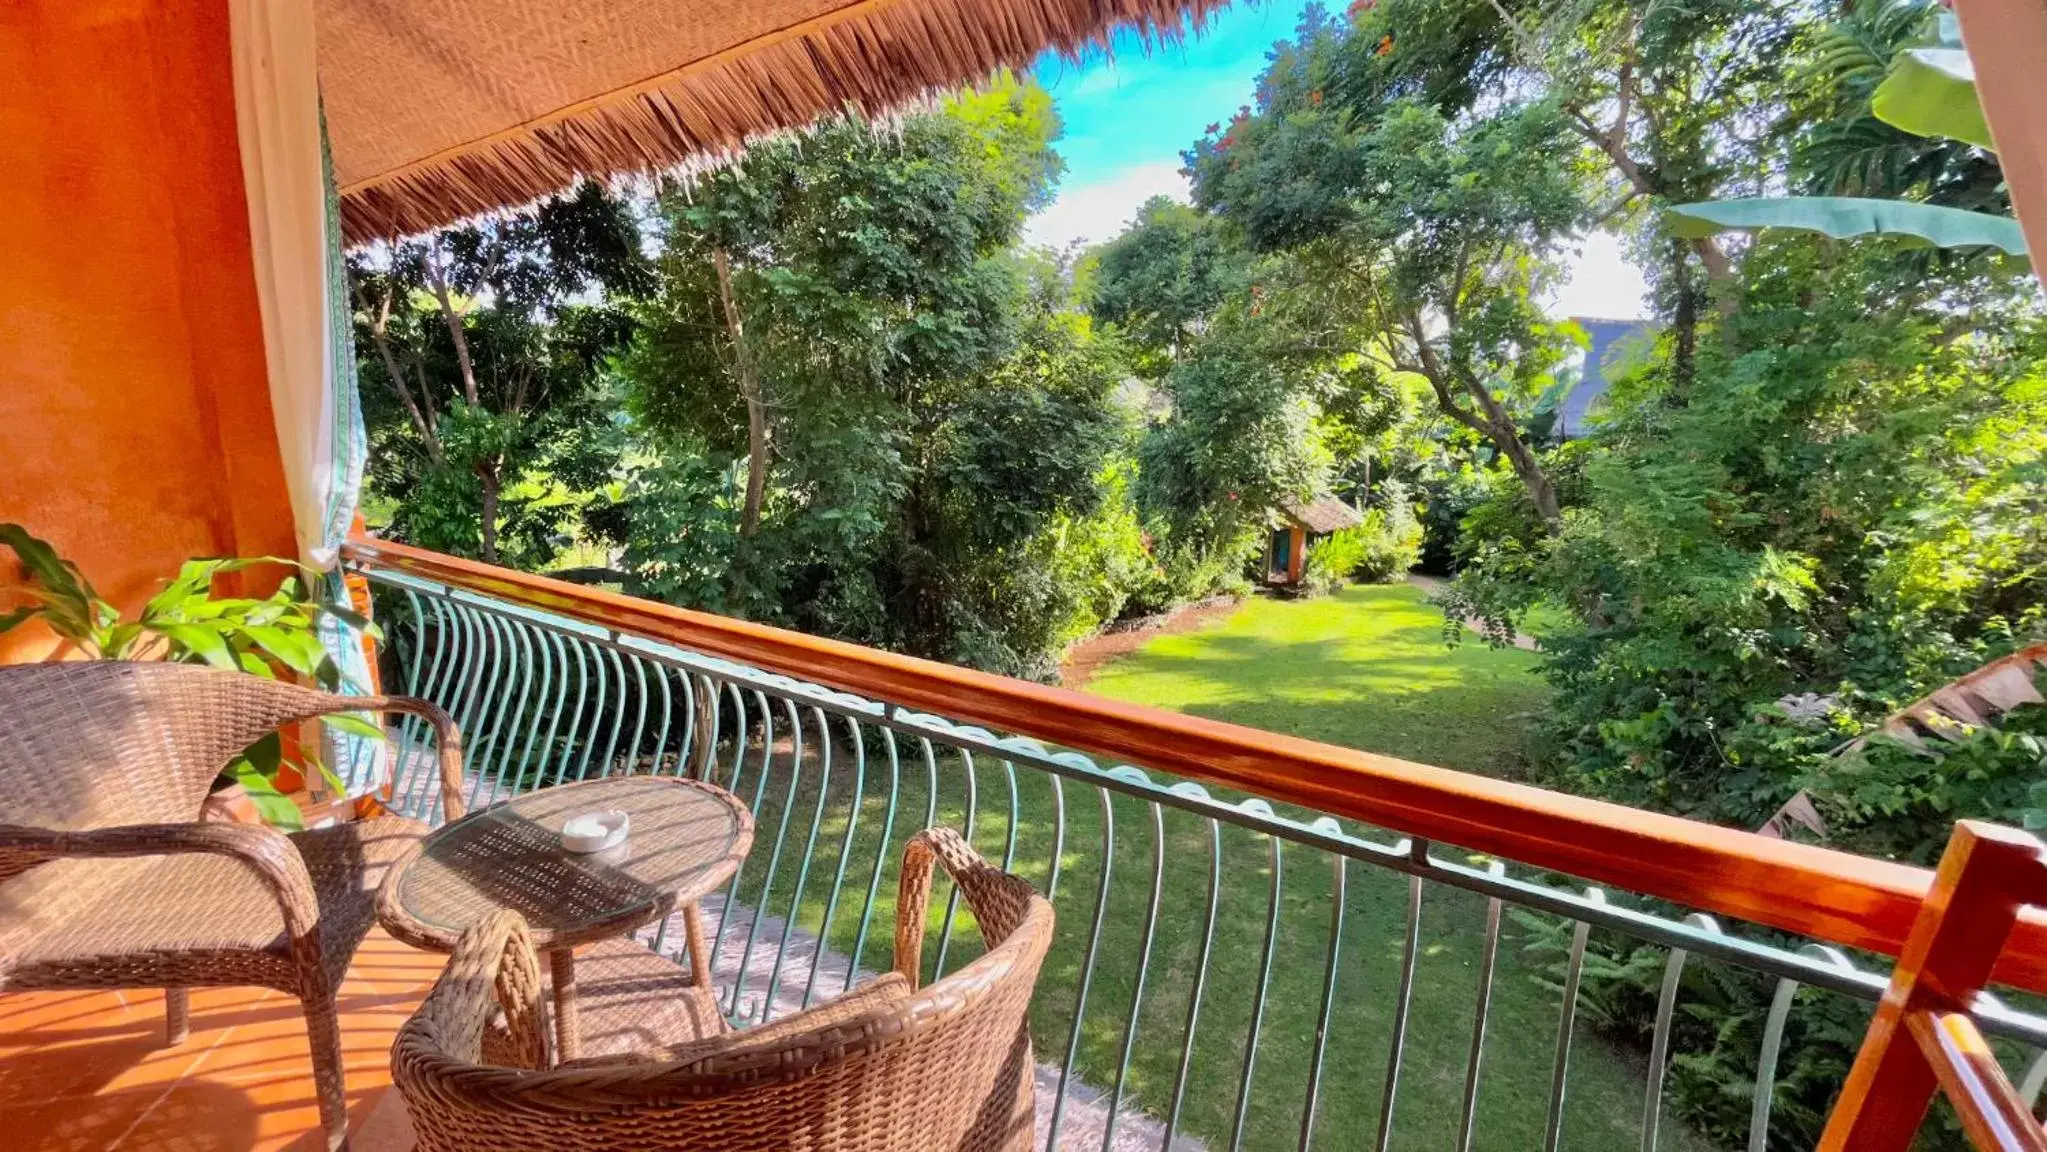 Balcony/Terrace in Coco Grove Beach Resort, Siquijor Island